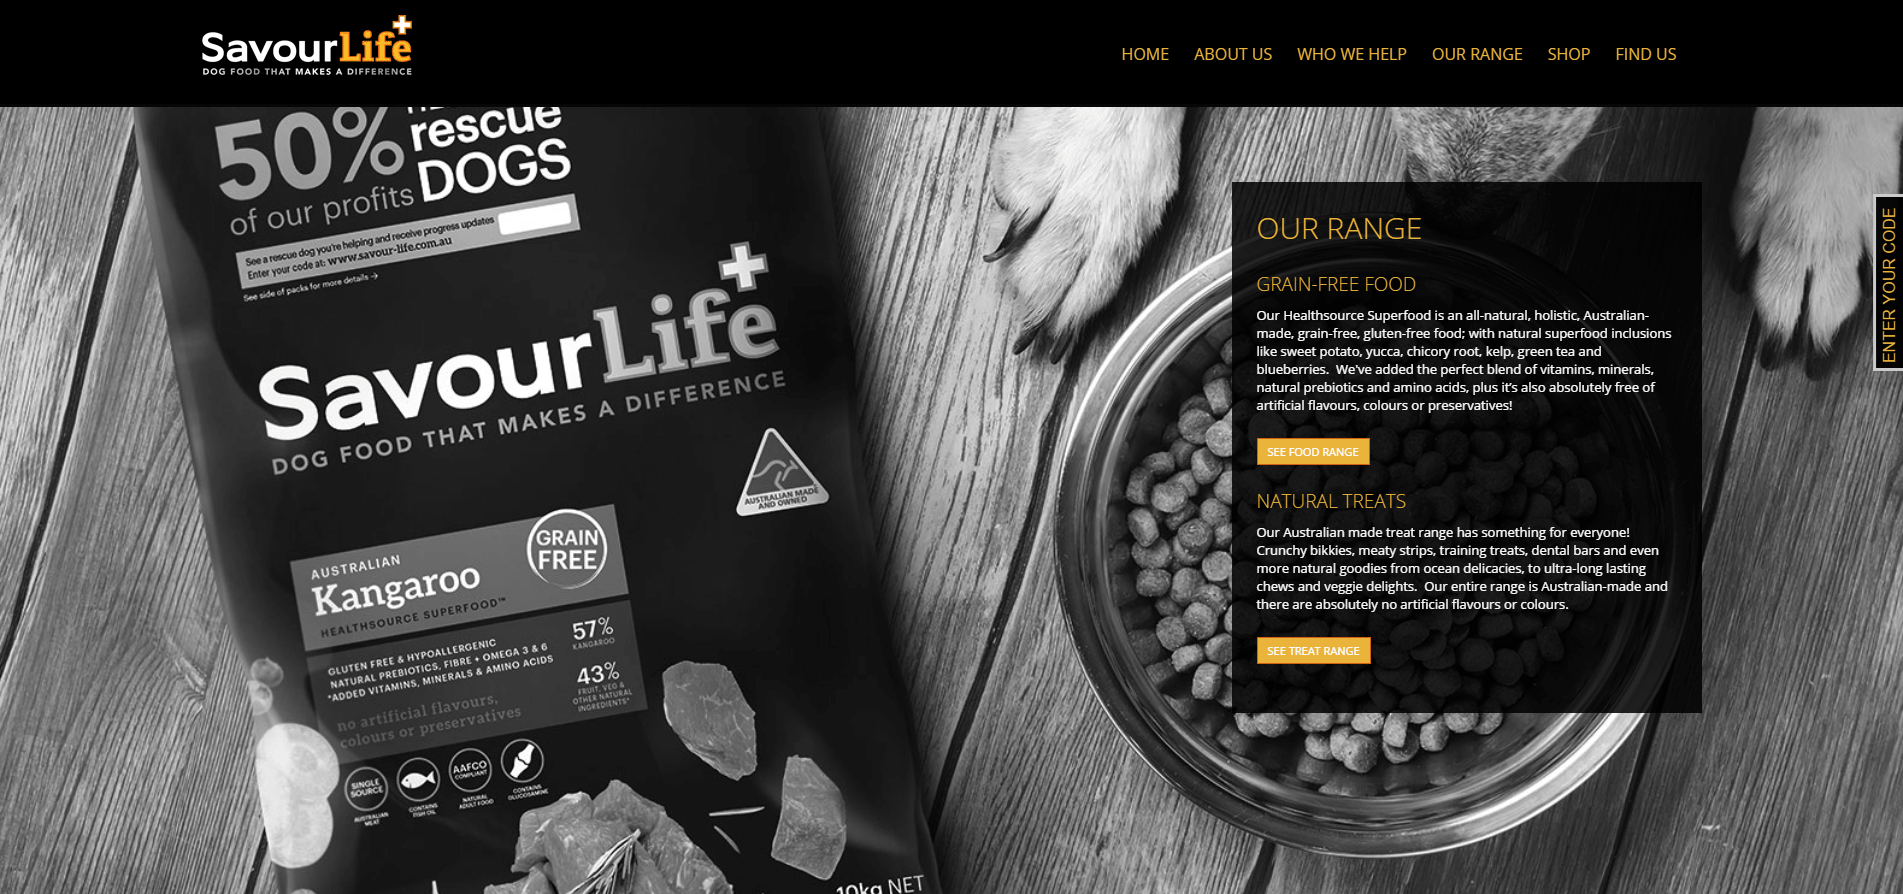 Savourlife Website Design